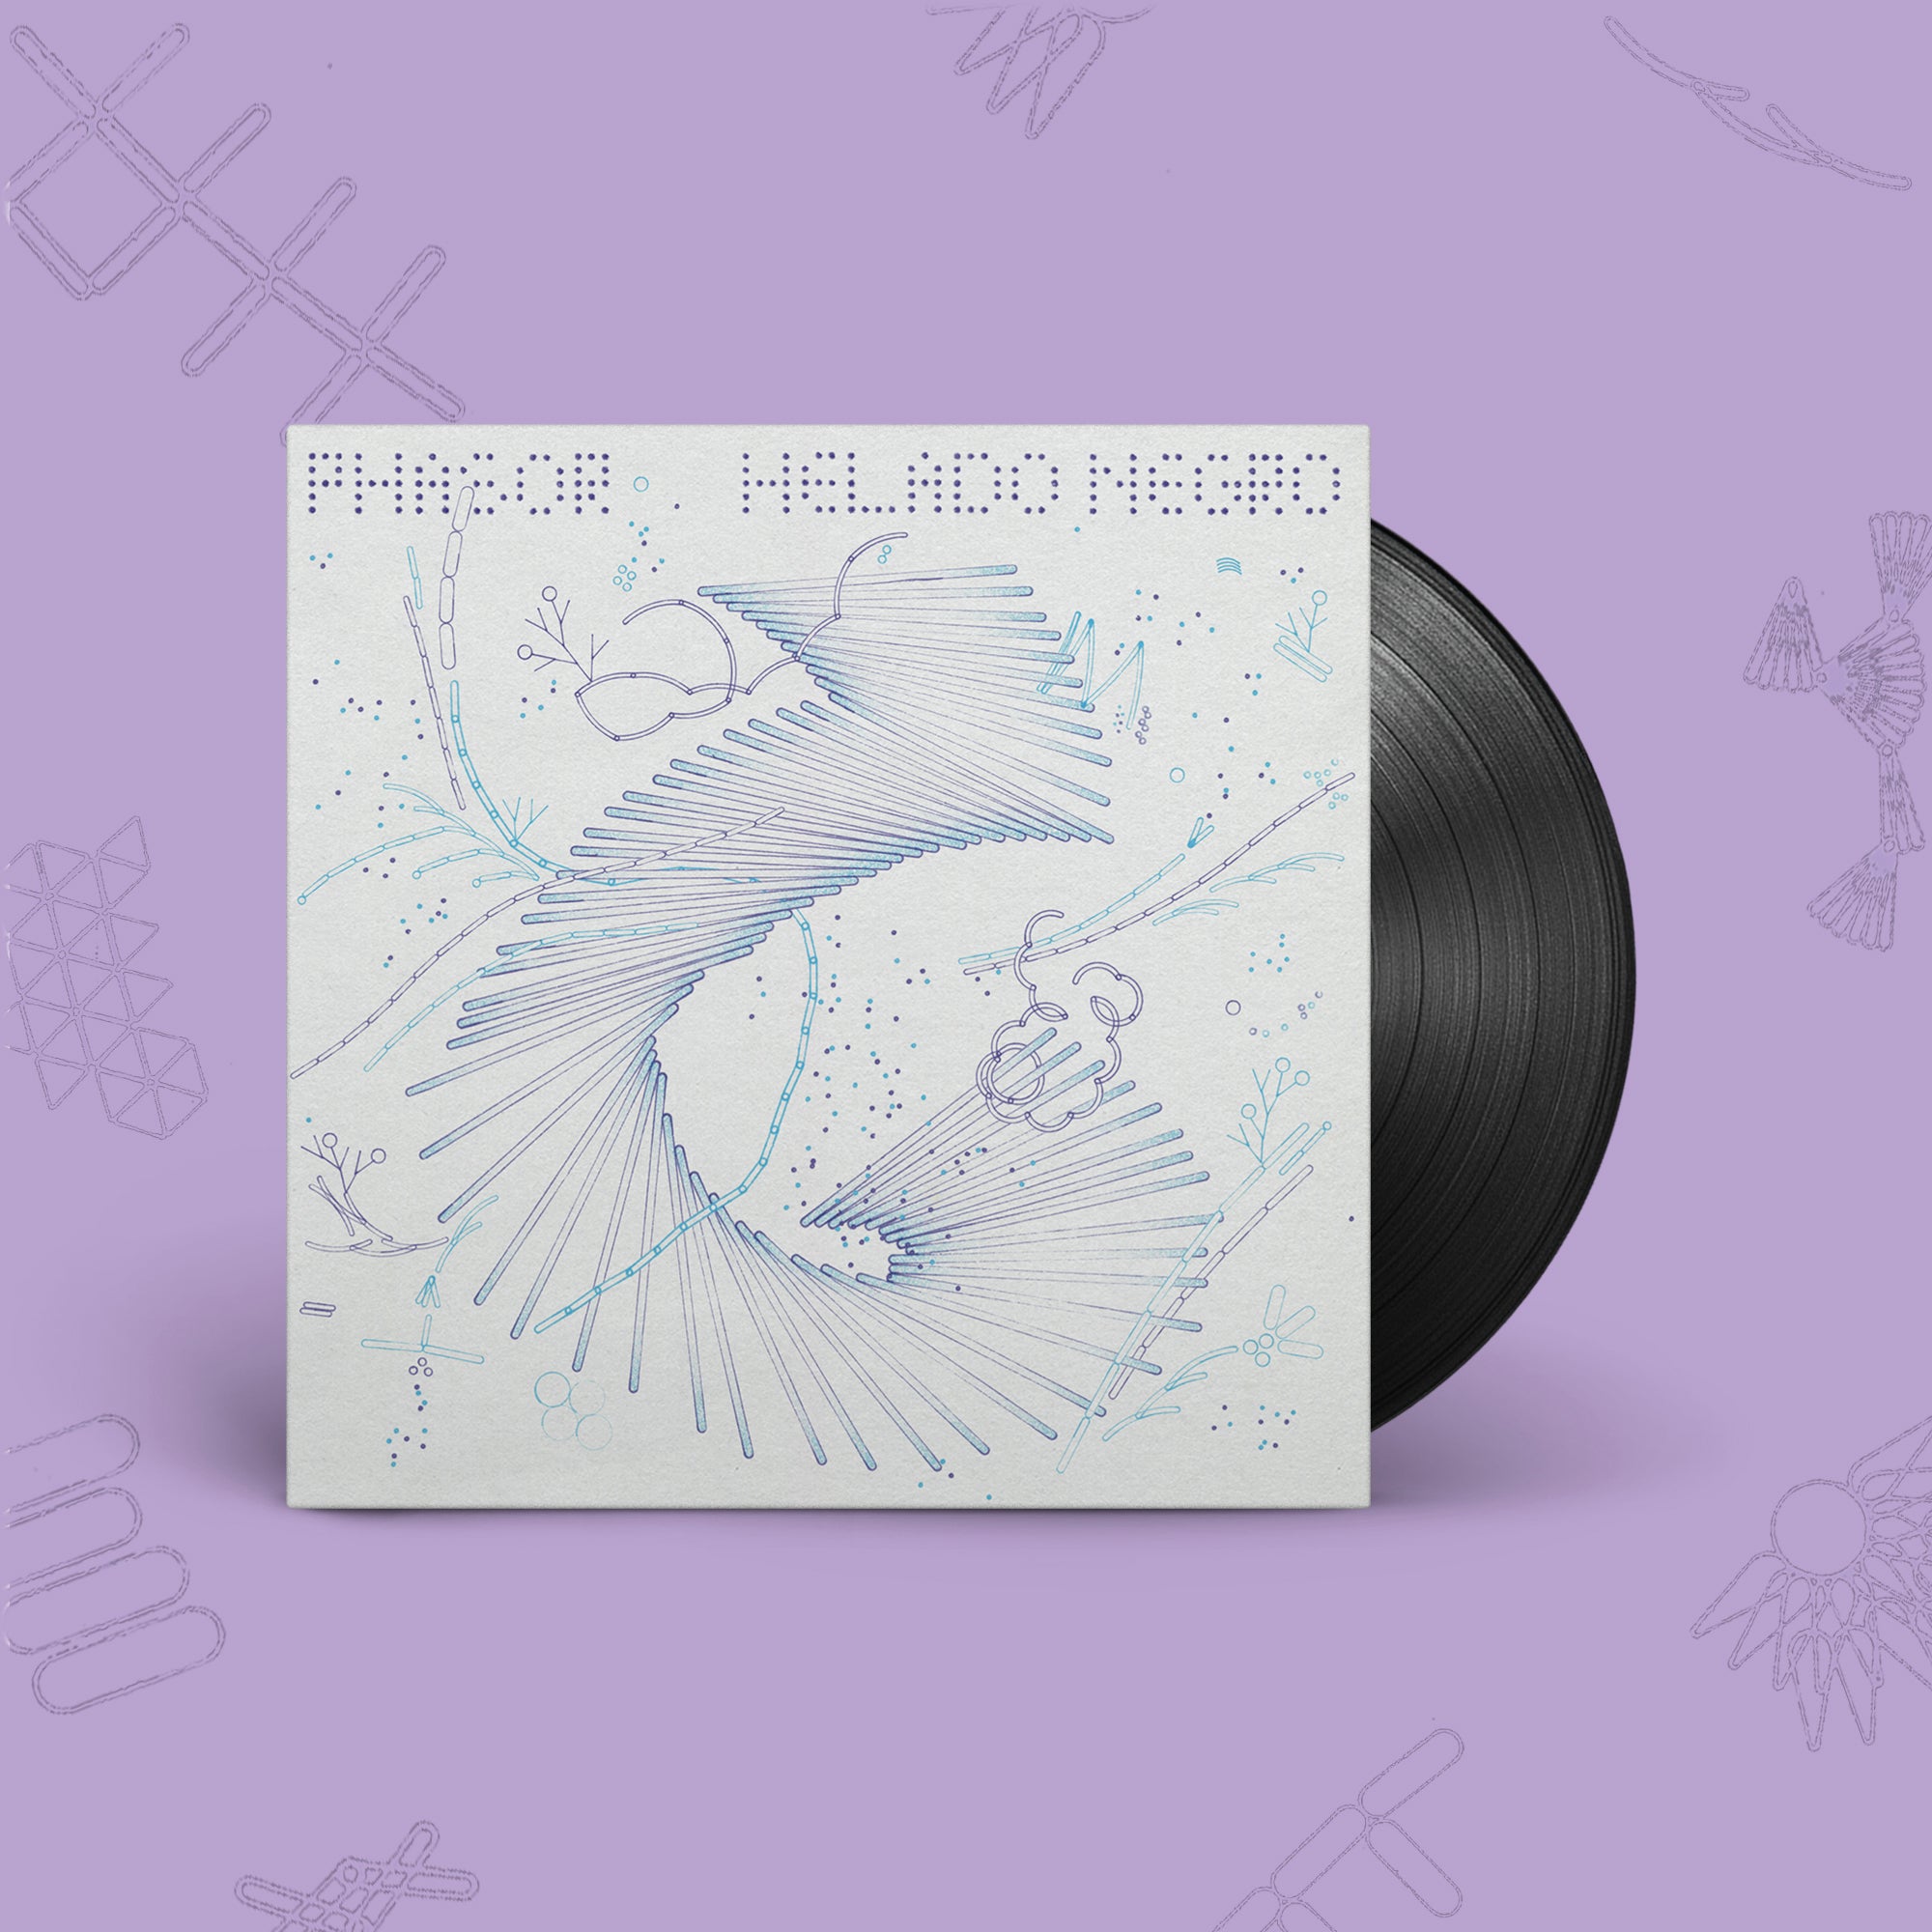 Helado Negro - Phasor: Vinyl LP